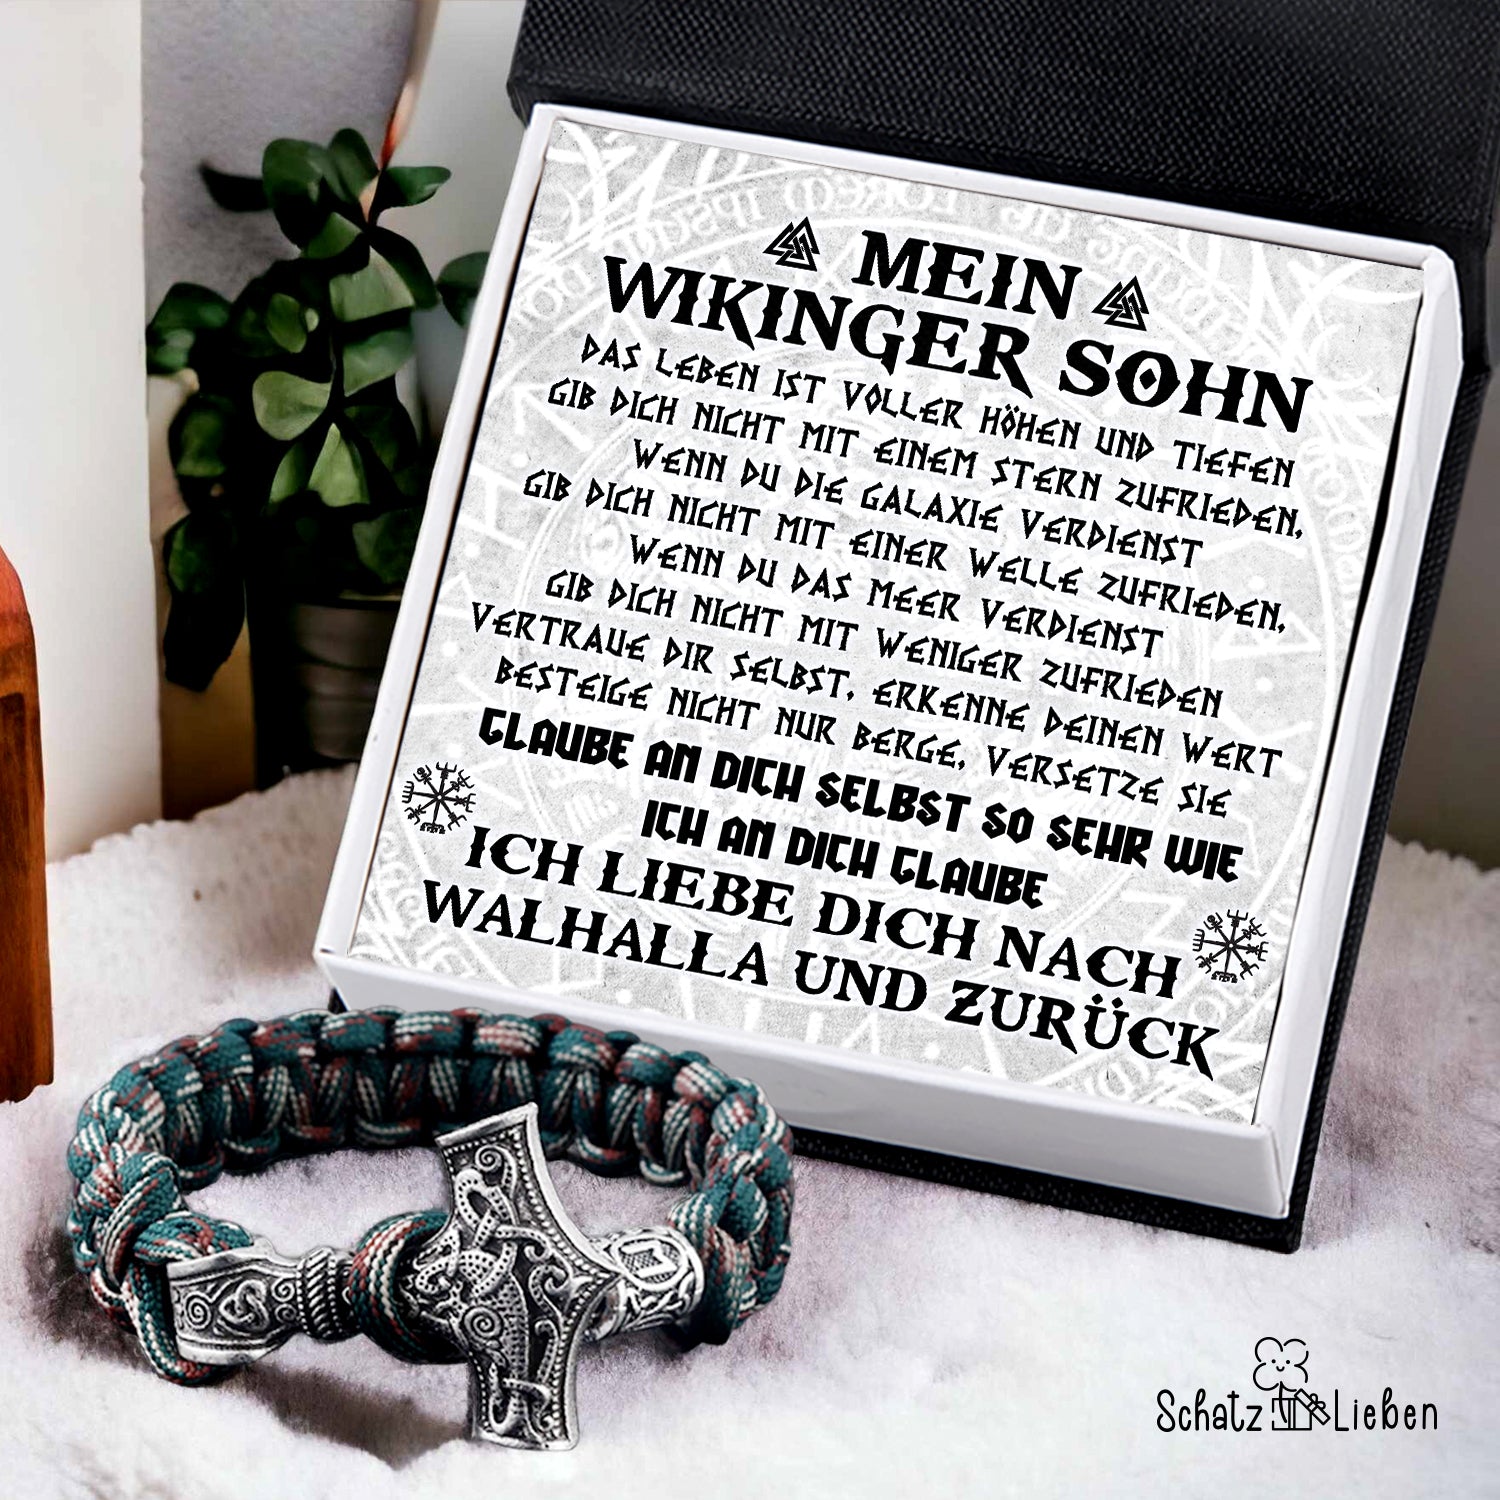 Wikinger Thors Hammer Armband - Wikinger - An Mein Wikinger Sohn - Besteige Nicht Nur Berge, Versetze Sie - Degbo16004